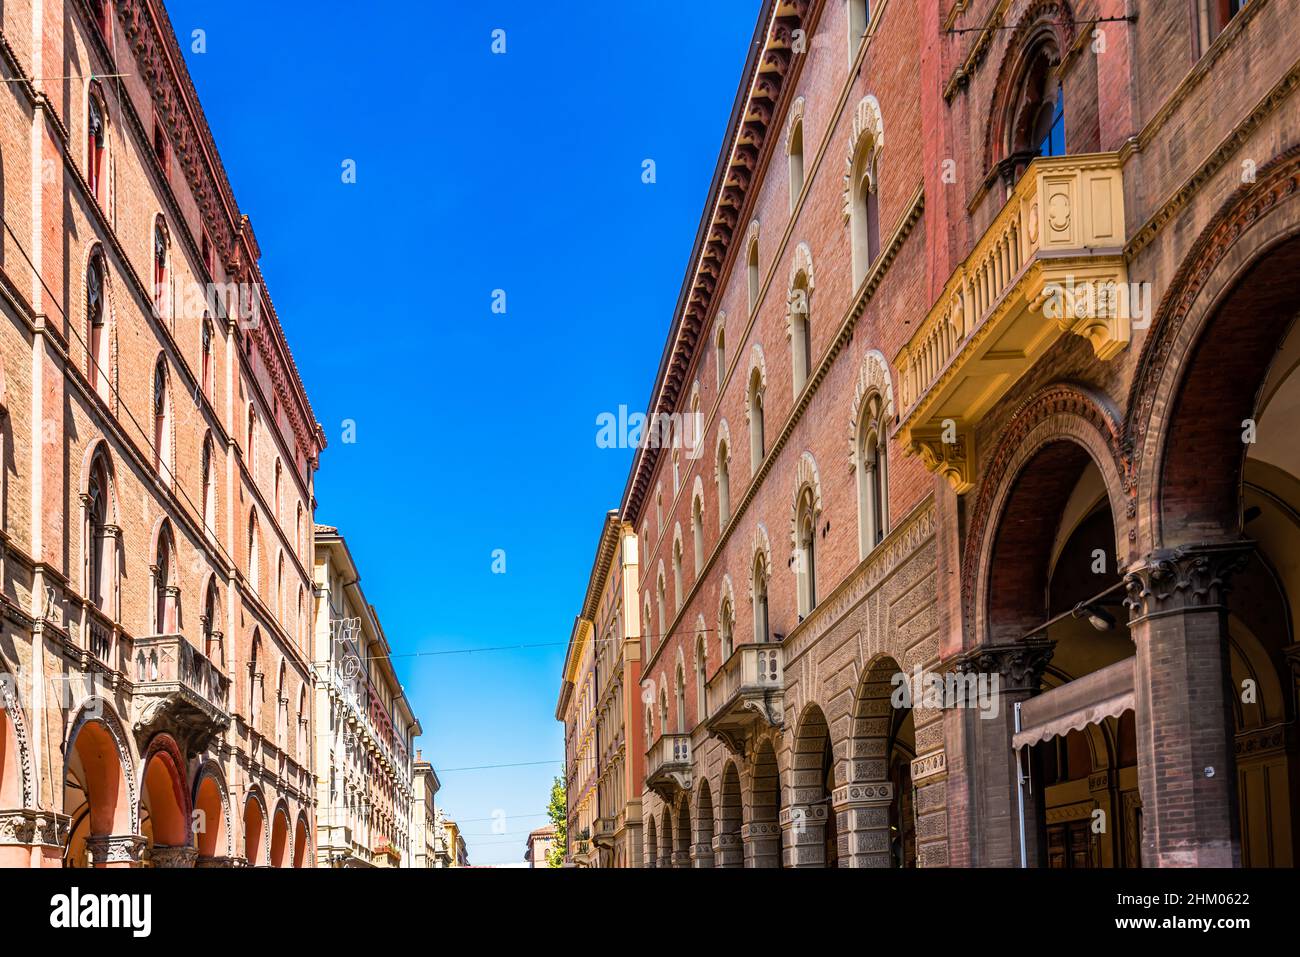 Arcade in the historical city center of Bologna, Italy Stock Photo